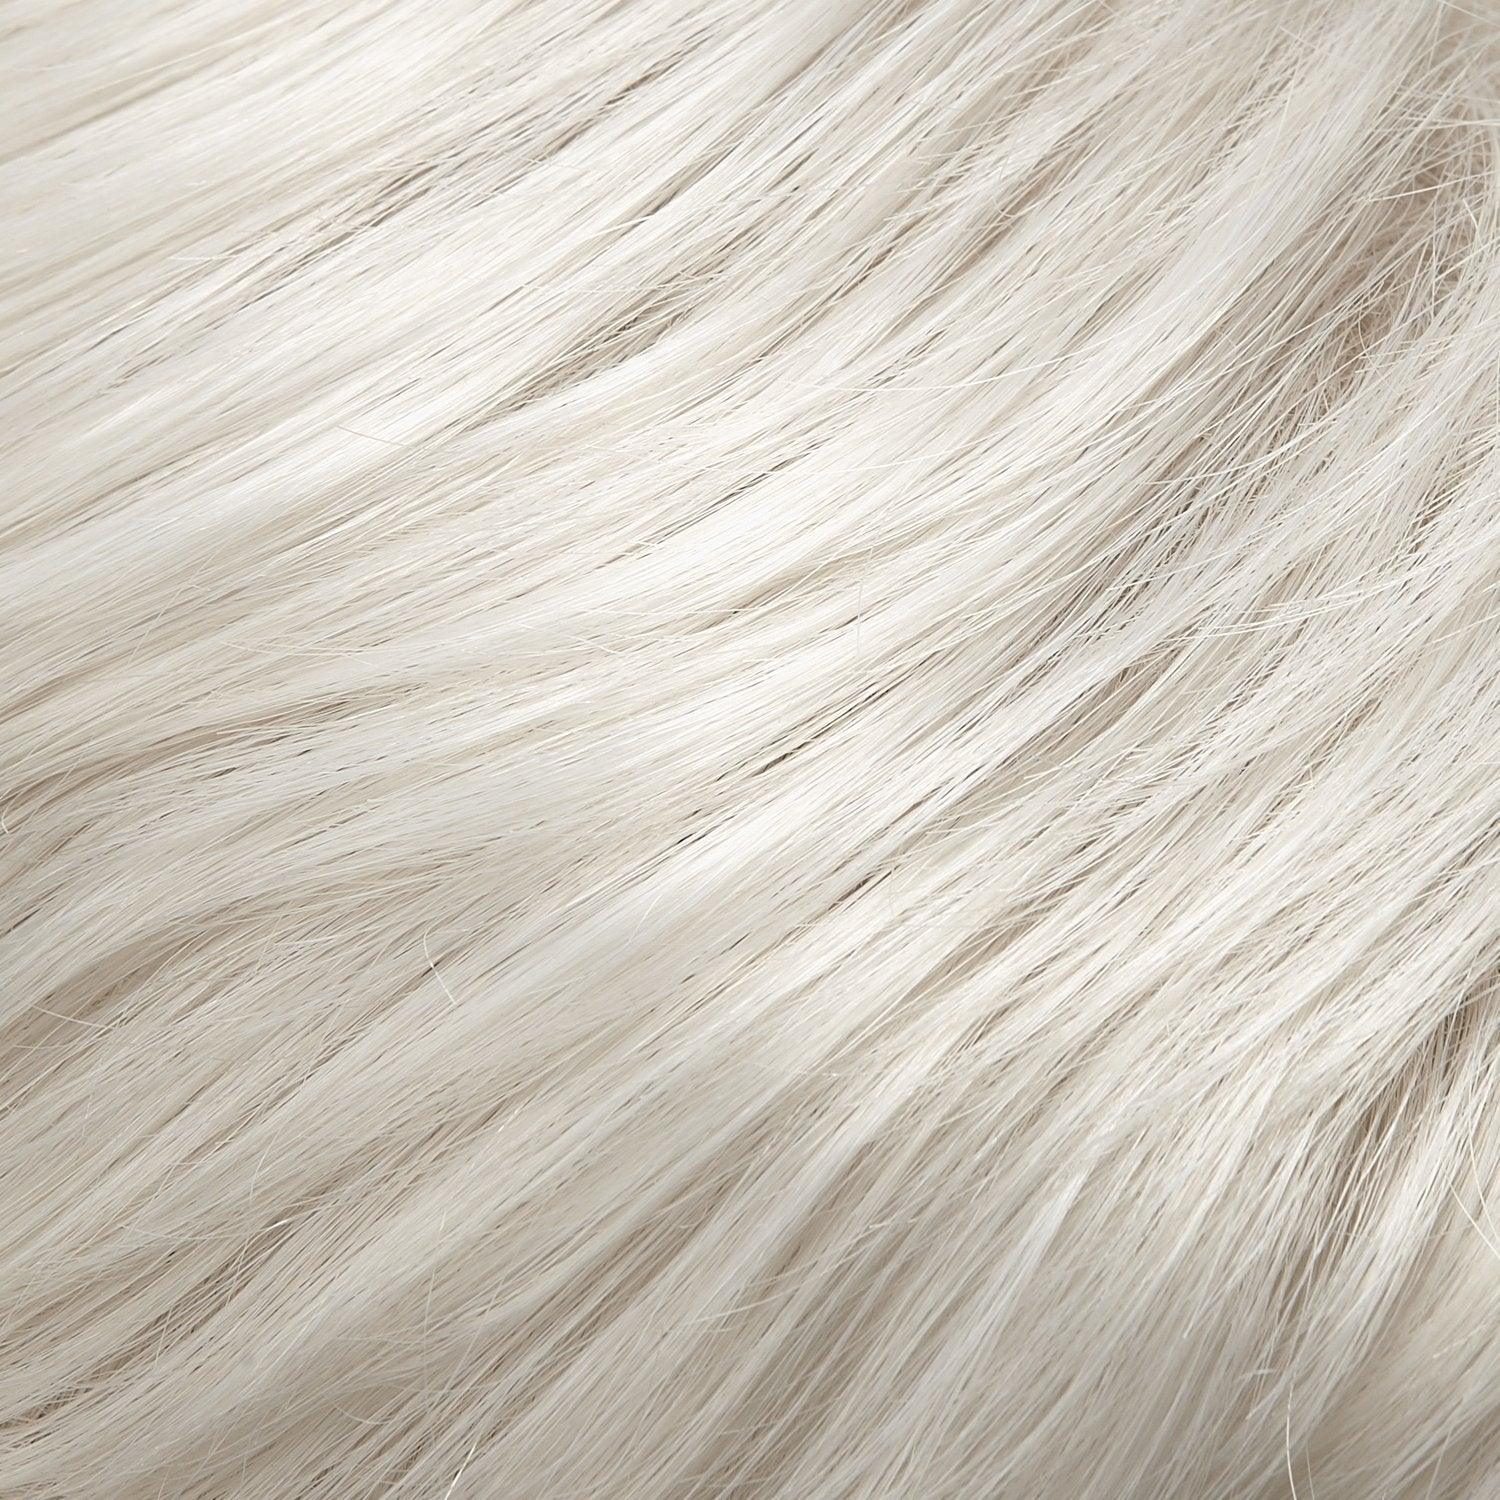 Julianne Lite Wig by Jon Renau | Synthetic Lace Front (Hand-Tied) - Ultimate Looks